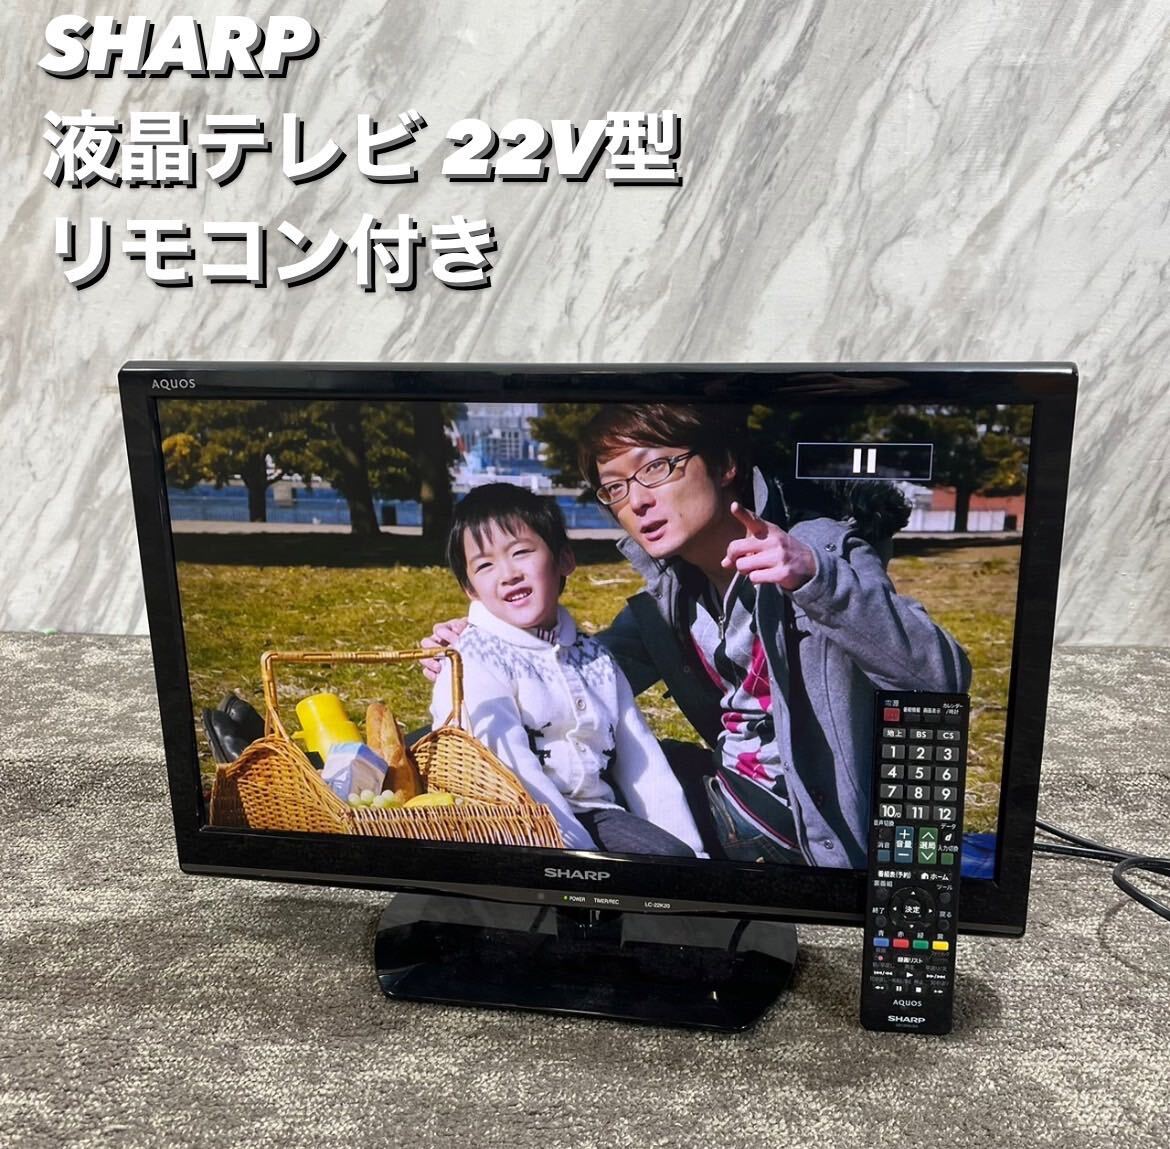 SHARP 液晶テレビ LC-22K20 22V型 AQUOS 家電 R261